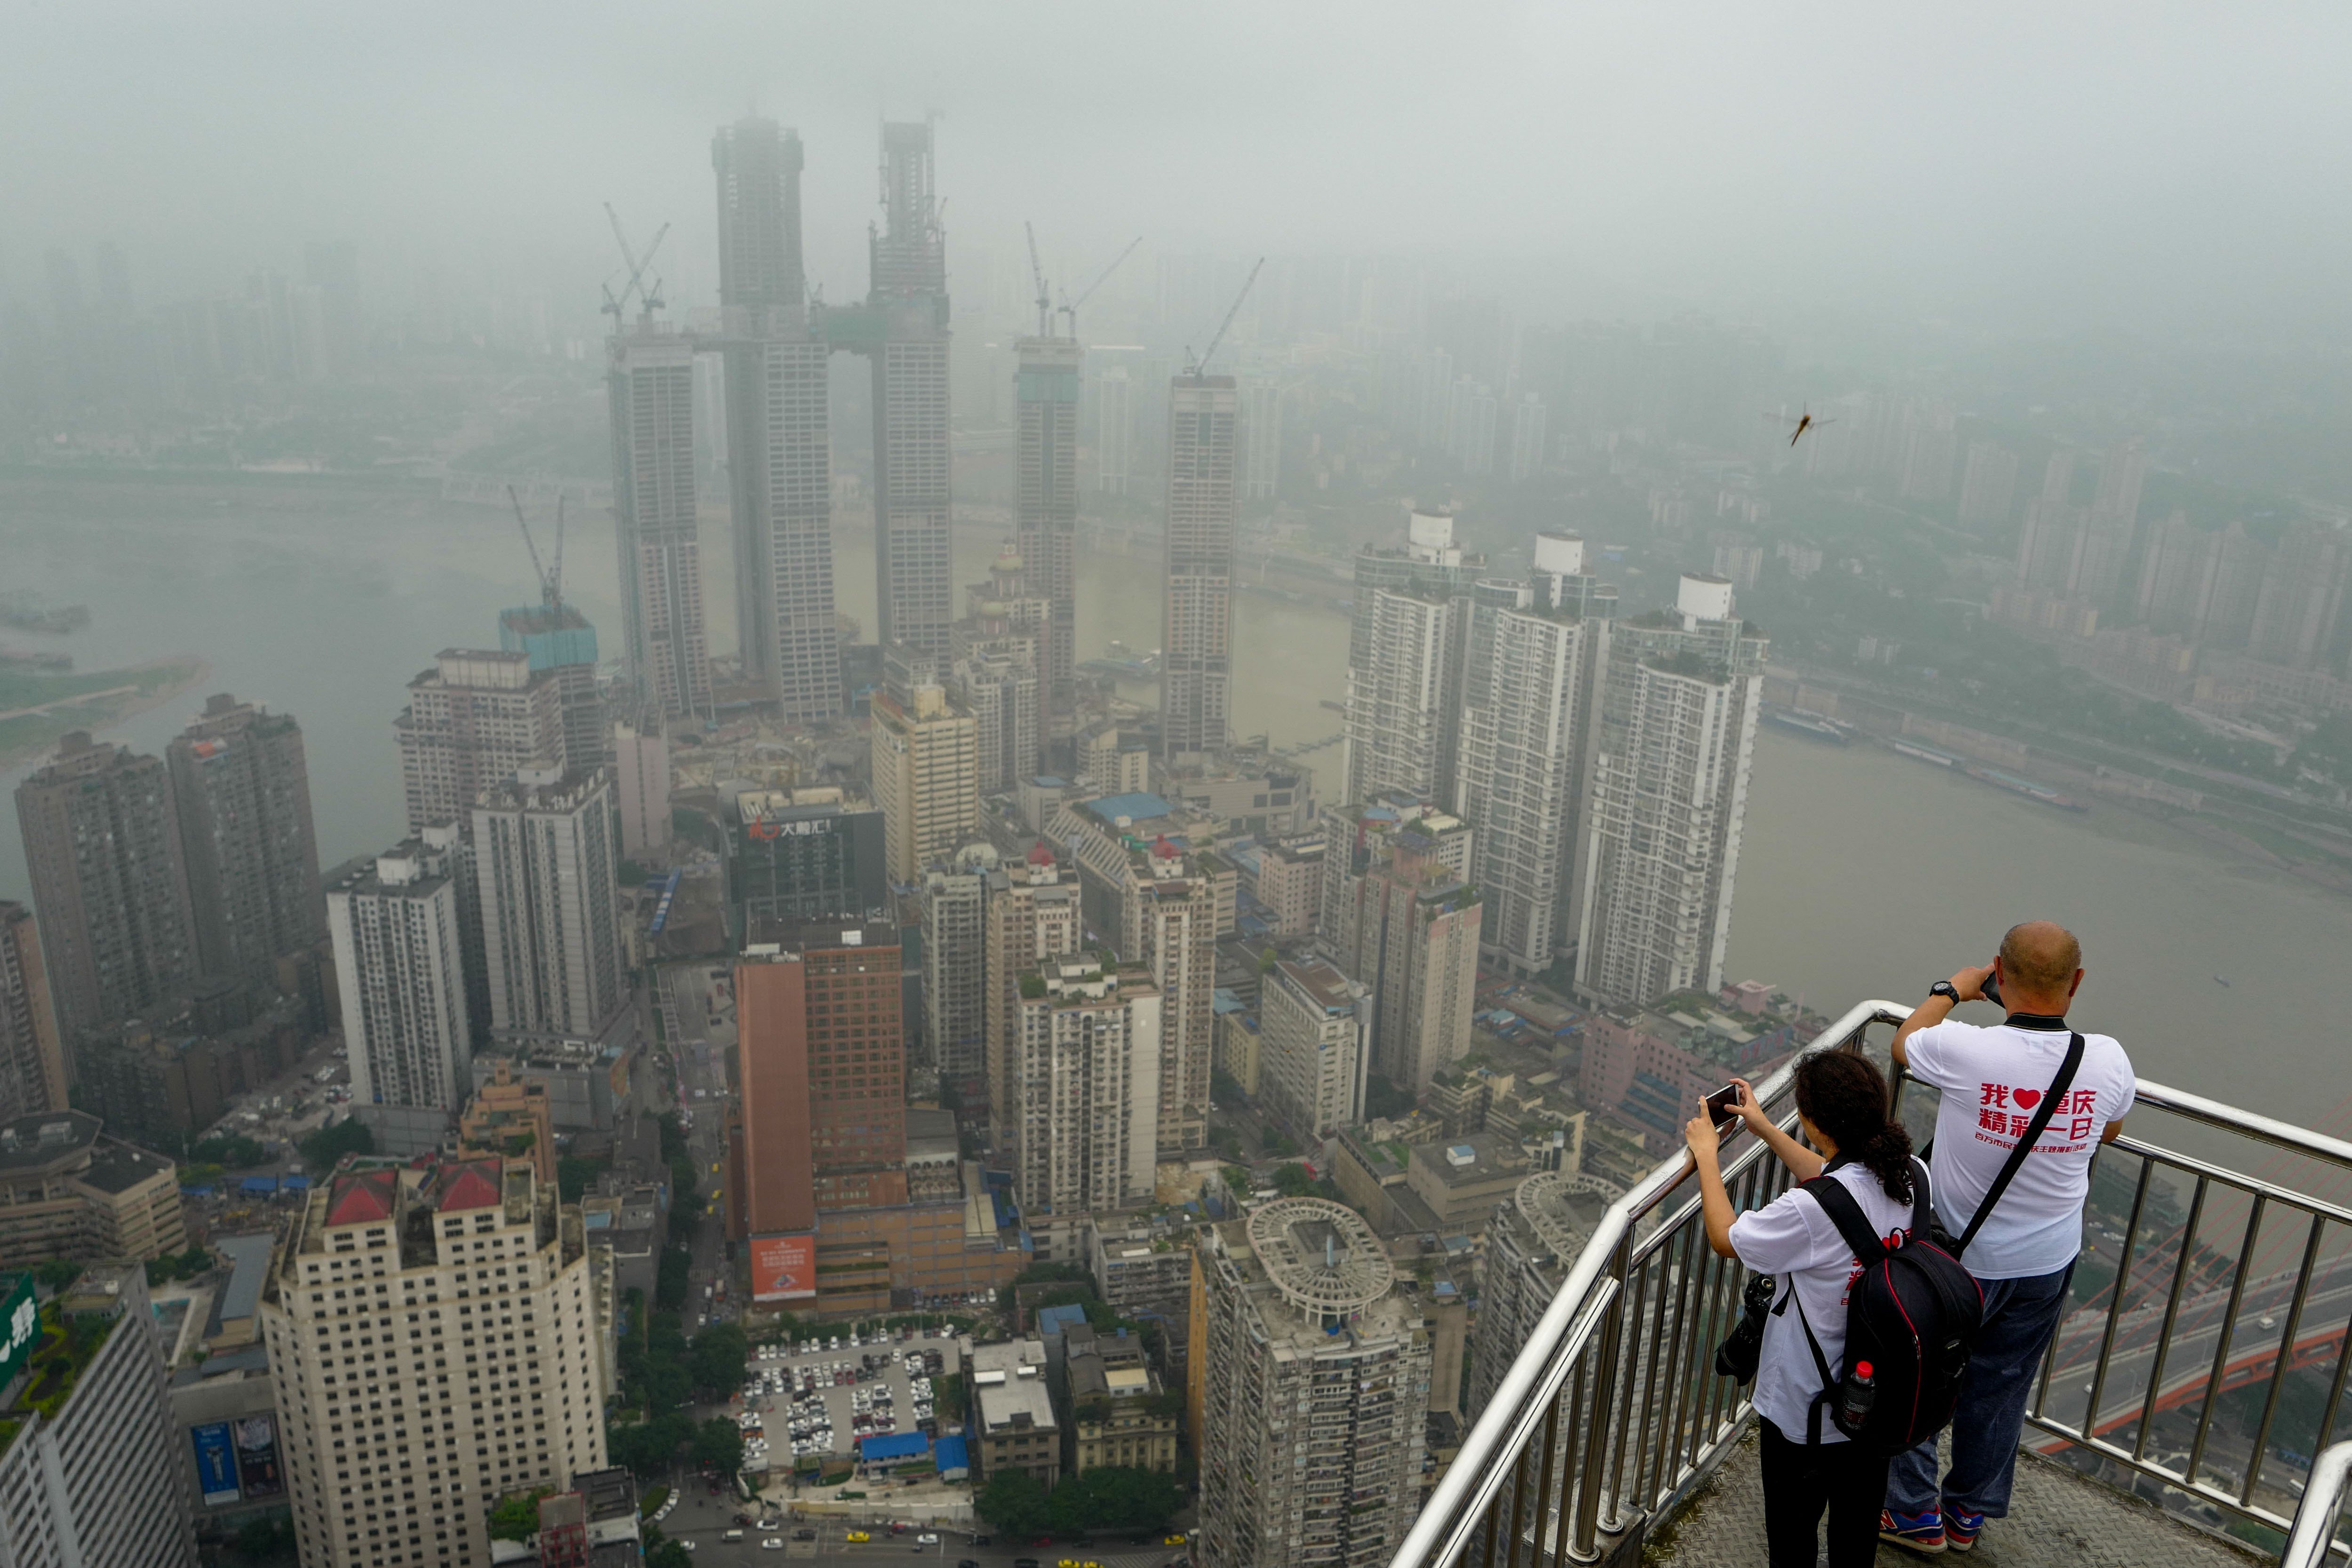 High-rise buildings under construction in Chongqing, southwest China. Photo: Xinhua